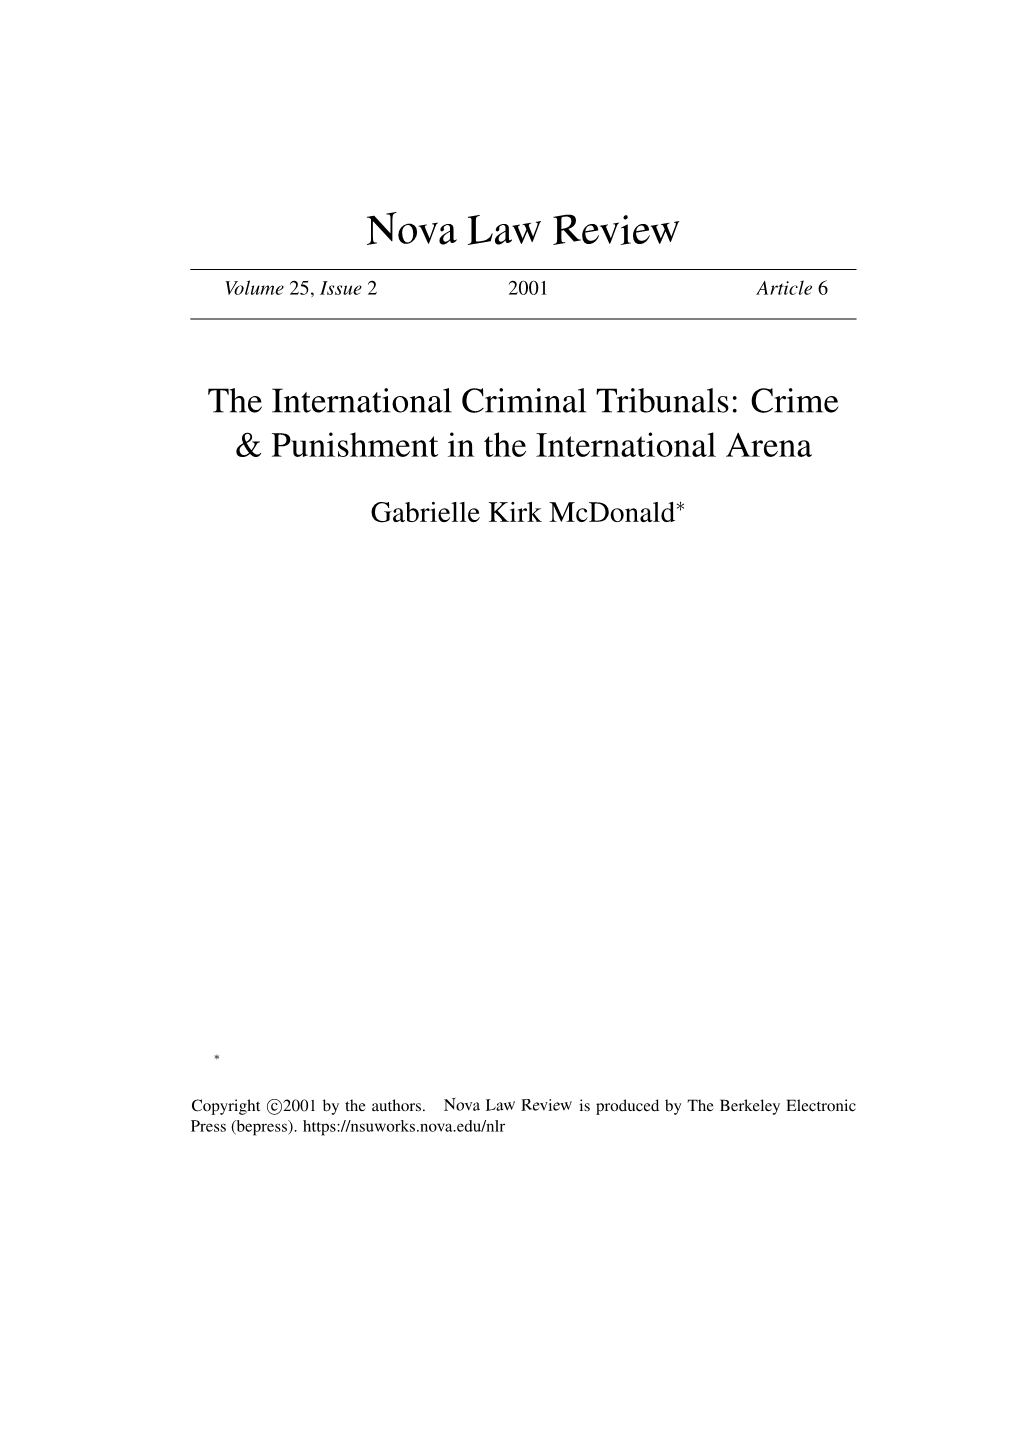 The International Criminal Tribunals: Crime & Punishment in the International Arena